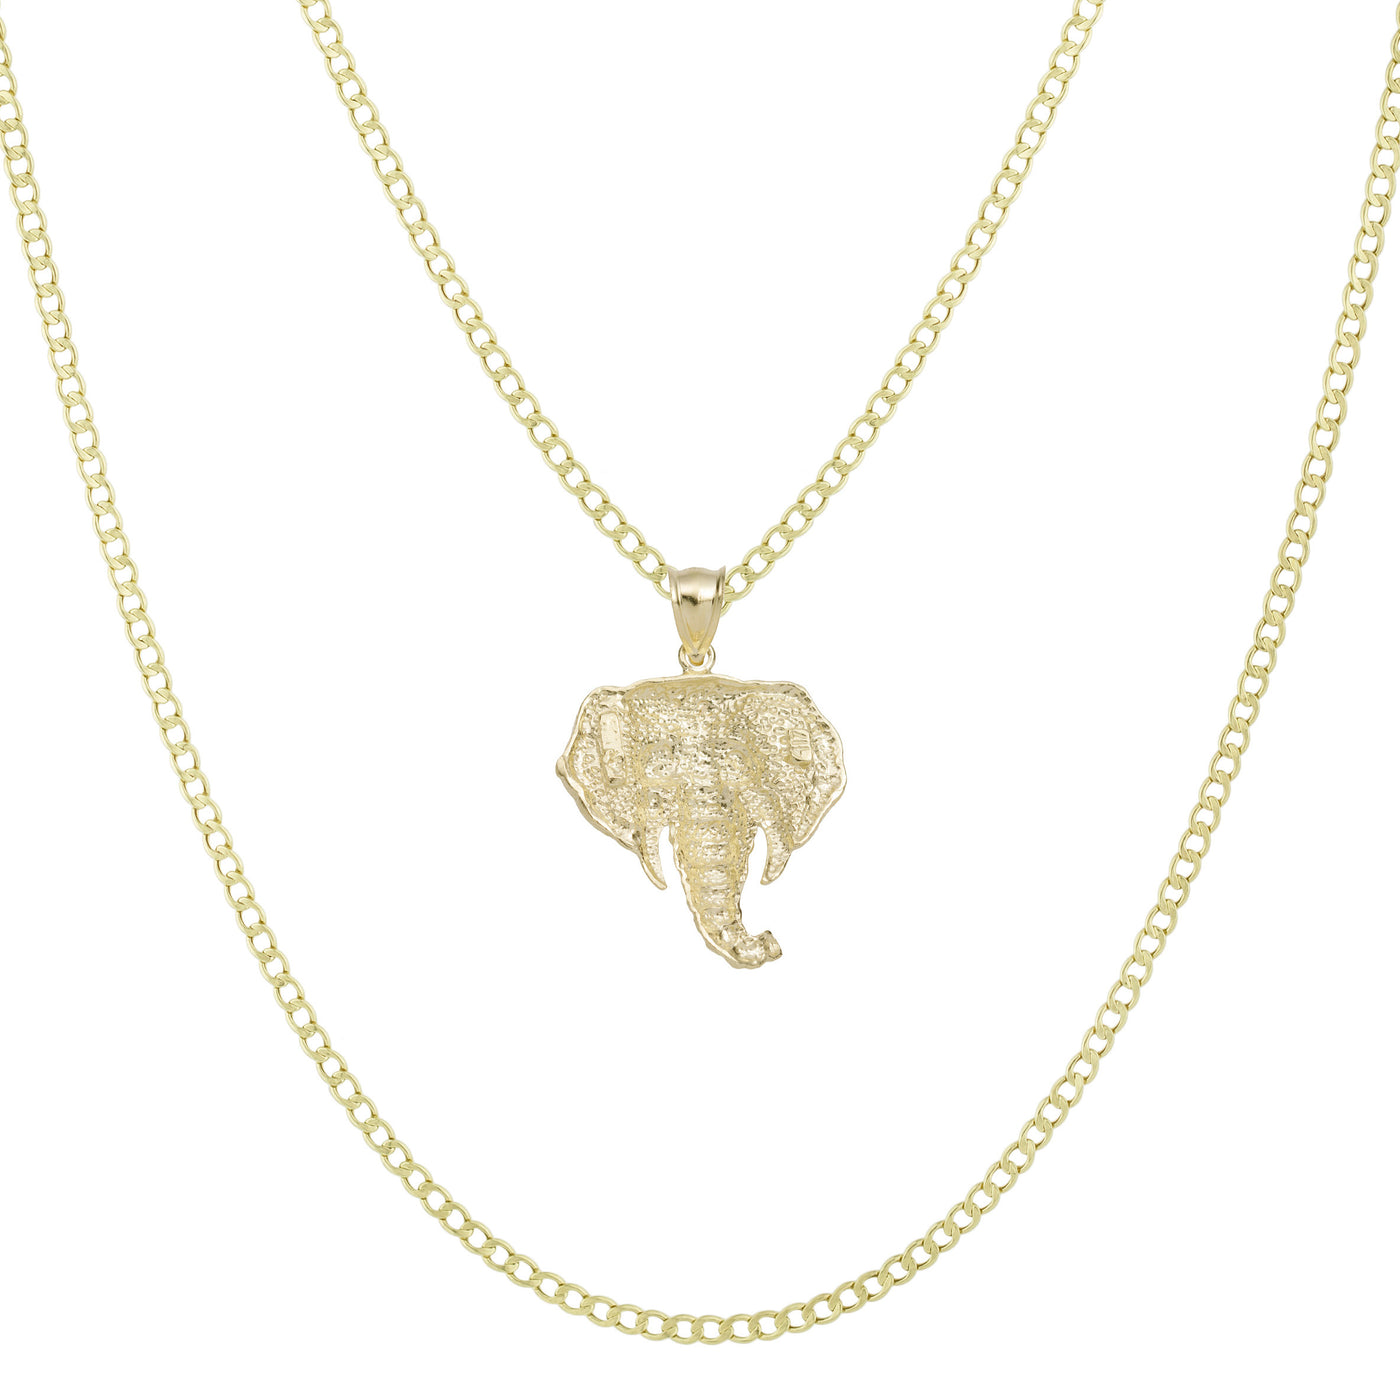 1 3/8" Diamond Cut Elephant Pendant & Chain Necklace Set 10K Yellow Gold